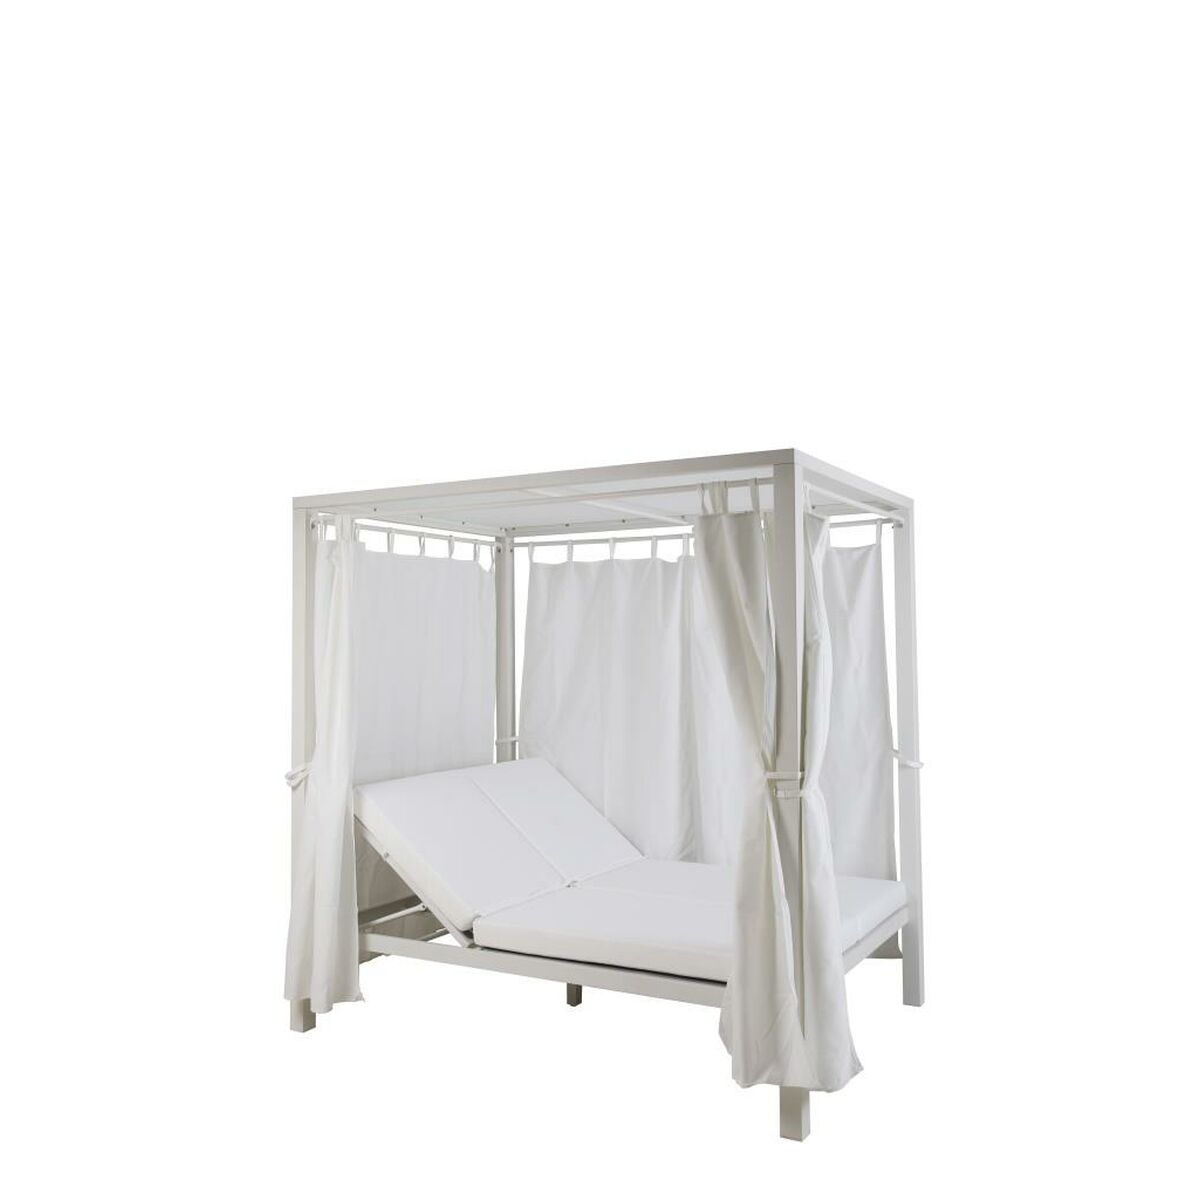 Luxury Design Greece Garden Bed White Aluminum (148 x 188 x 205 cm)